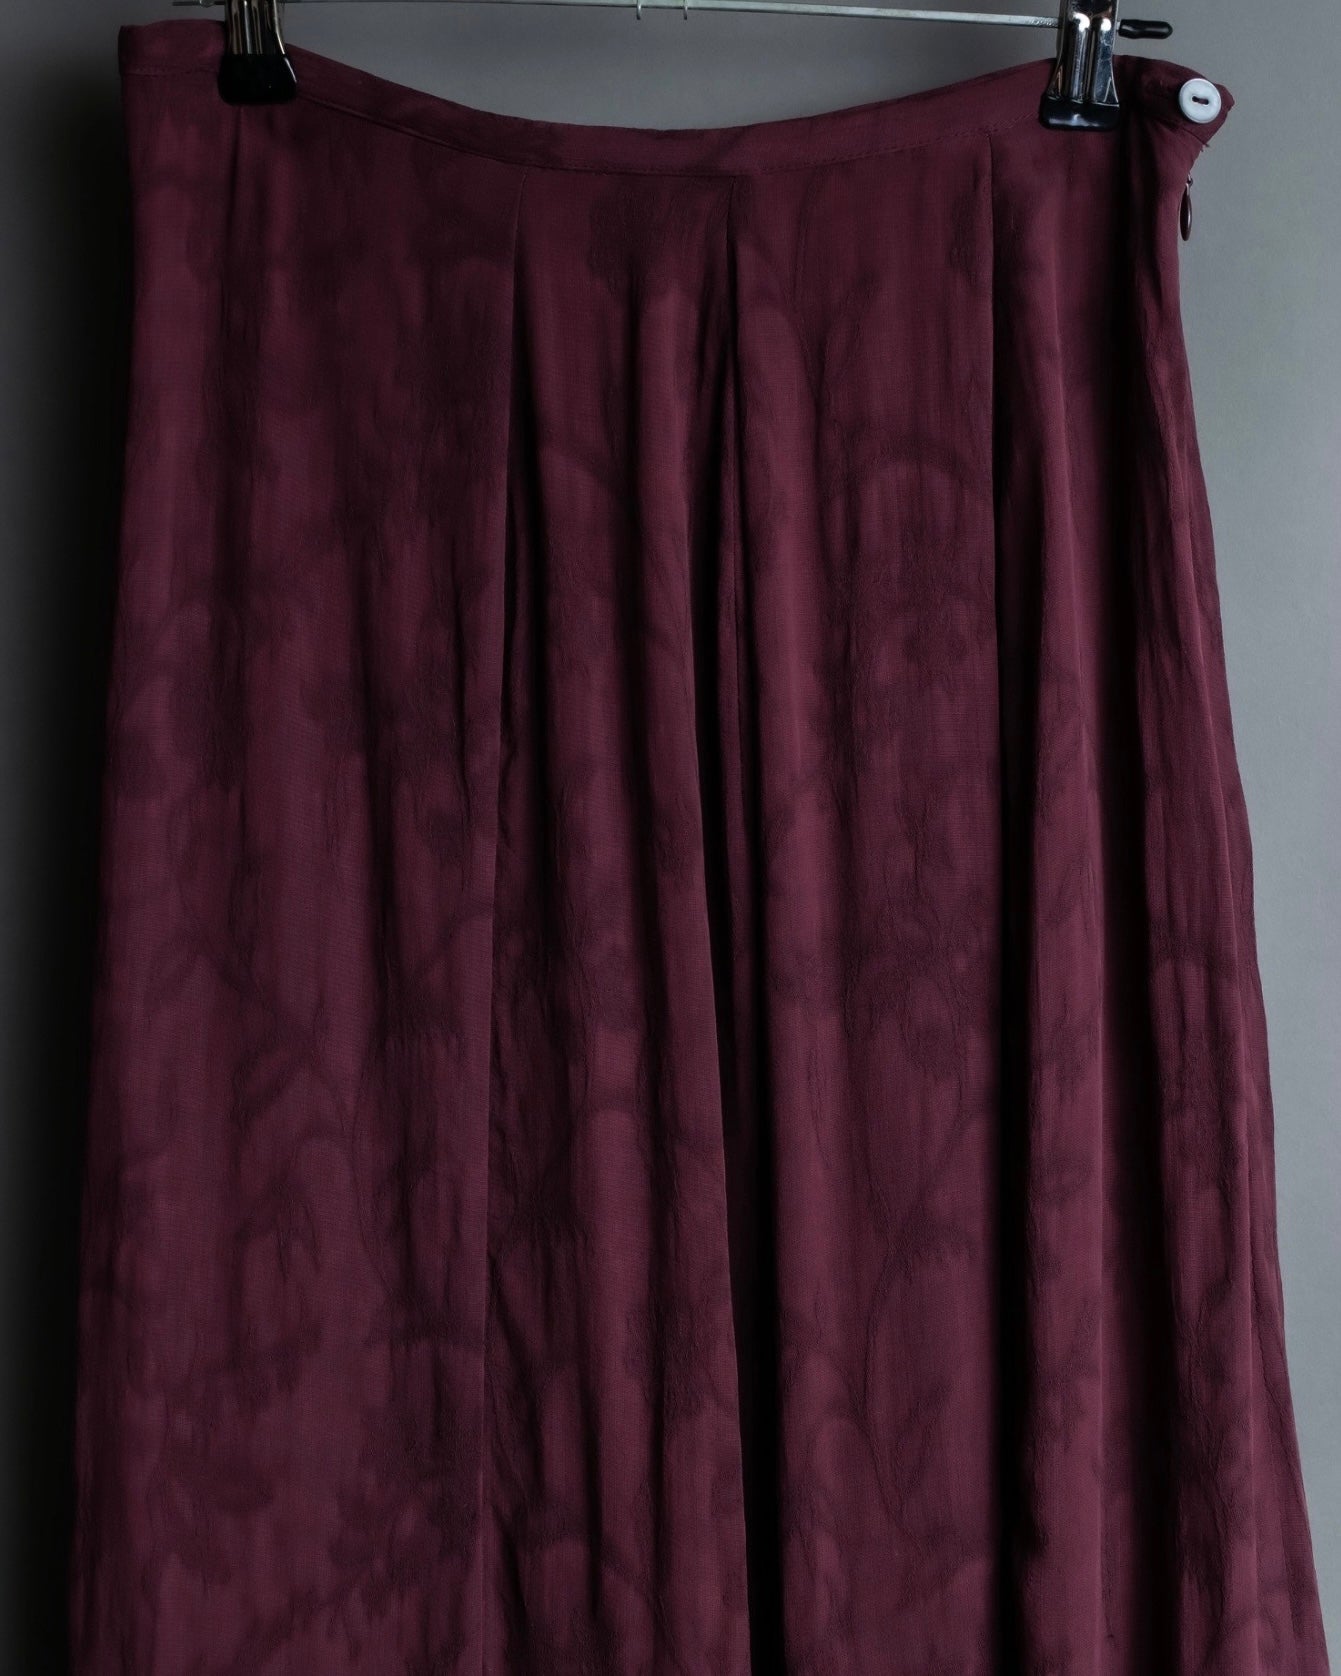 Lura Ashley Rose pattern skirt